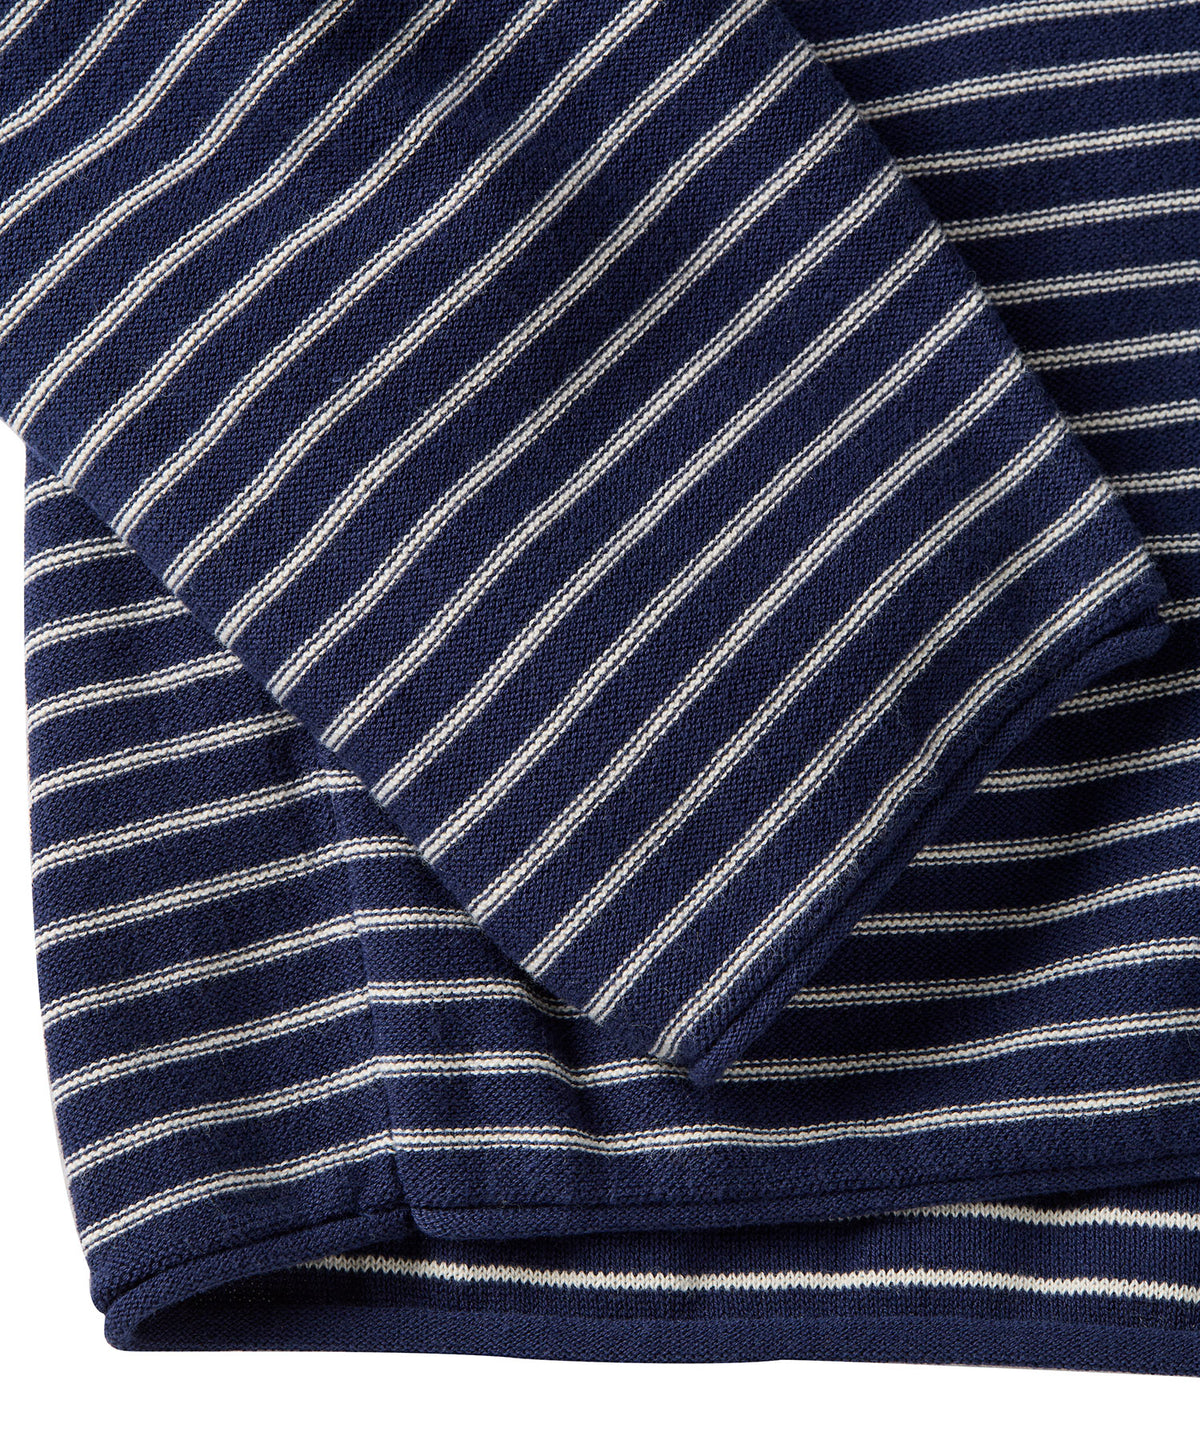 Striped Long-Sleeve Sweater